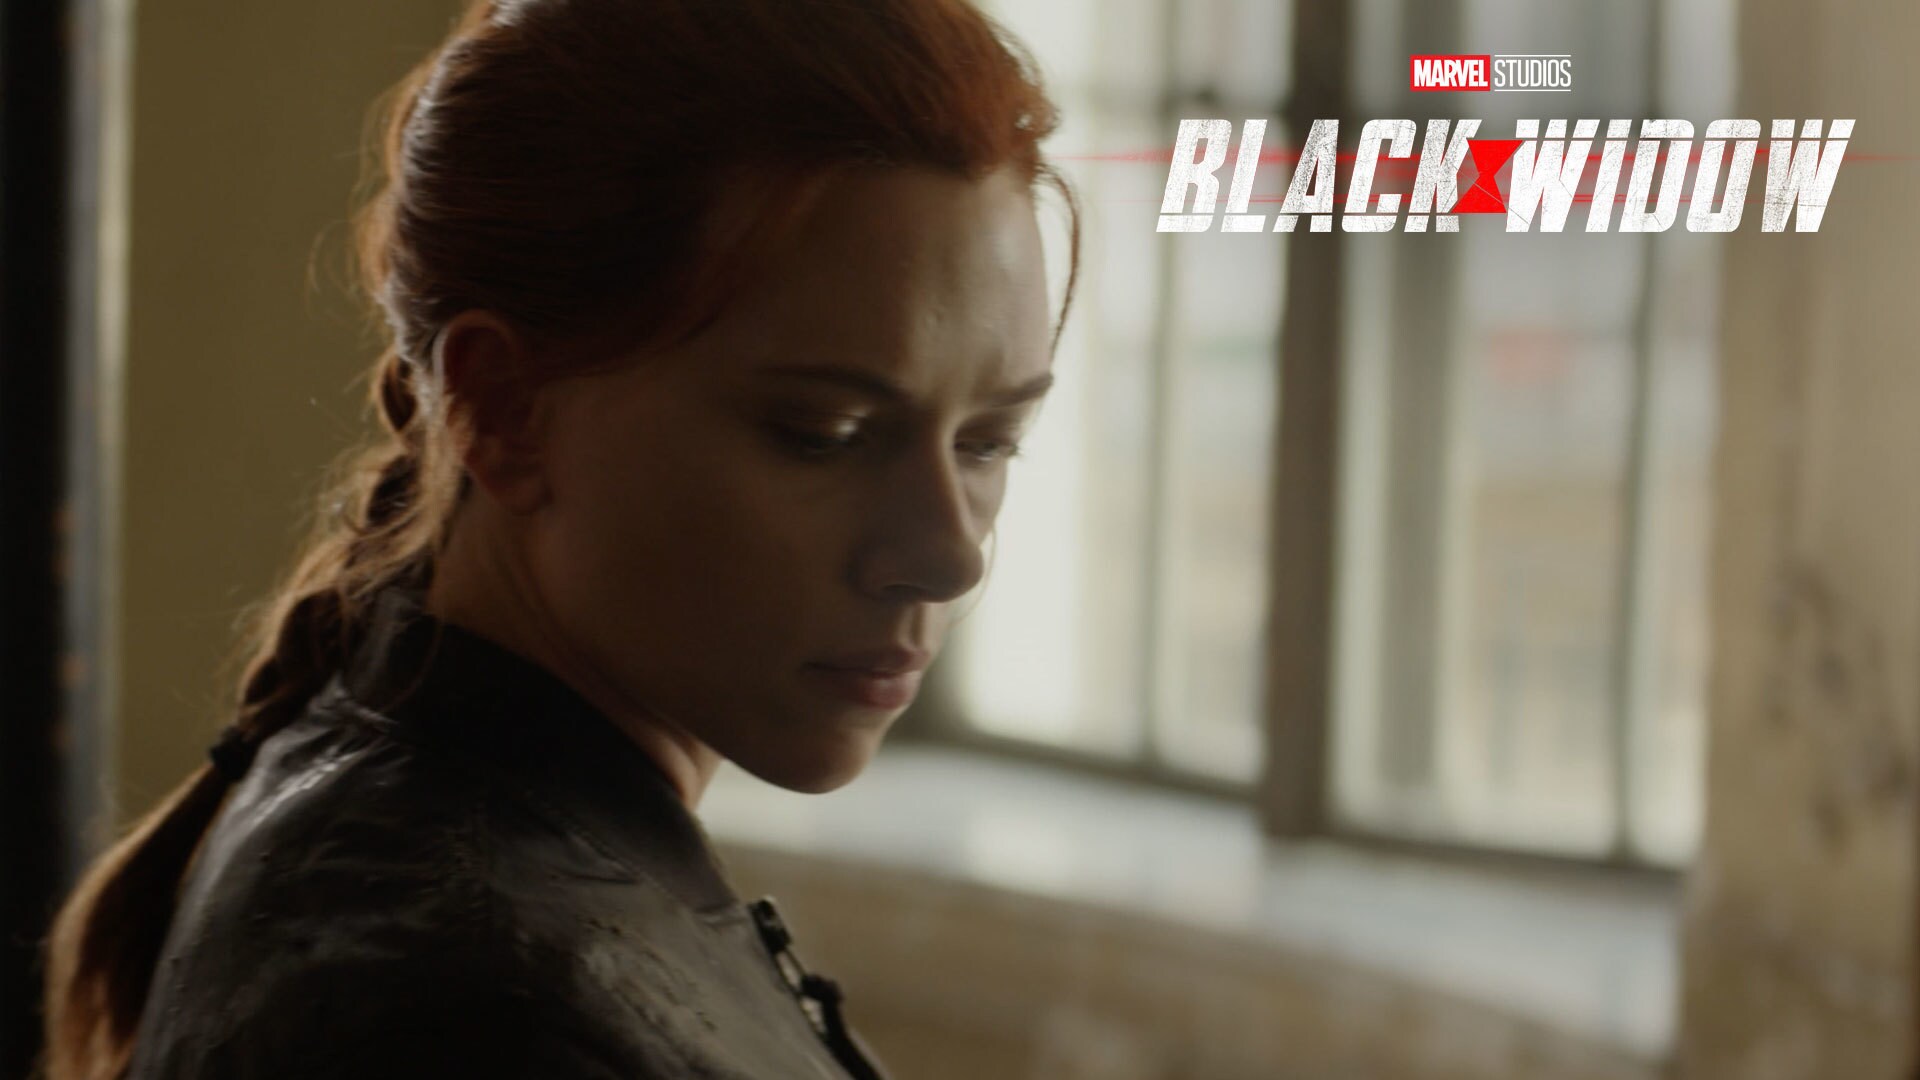 Marvel Studios Black Widow – Final Trailer